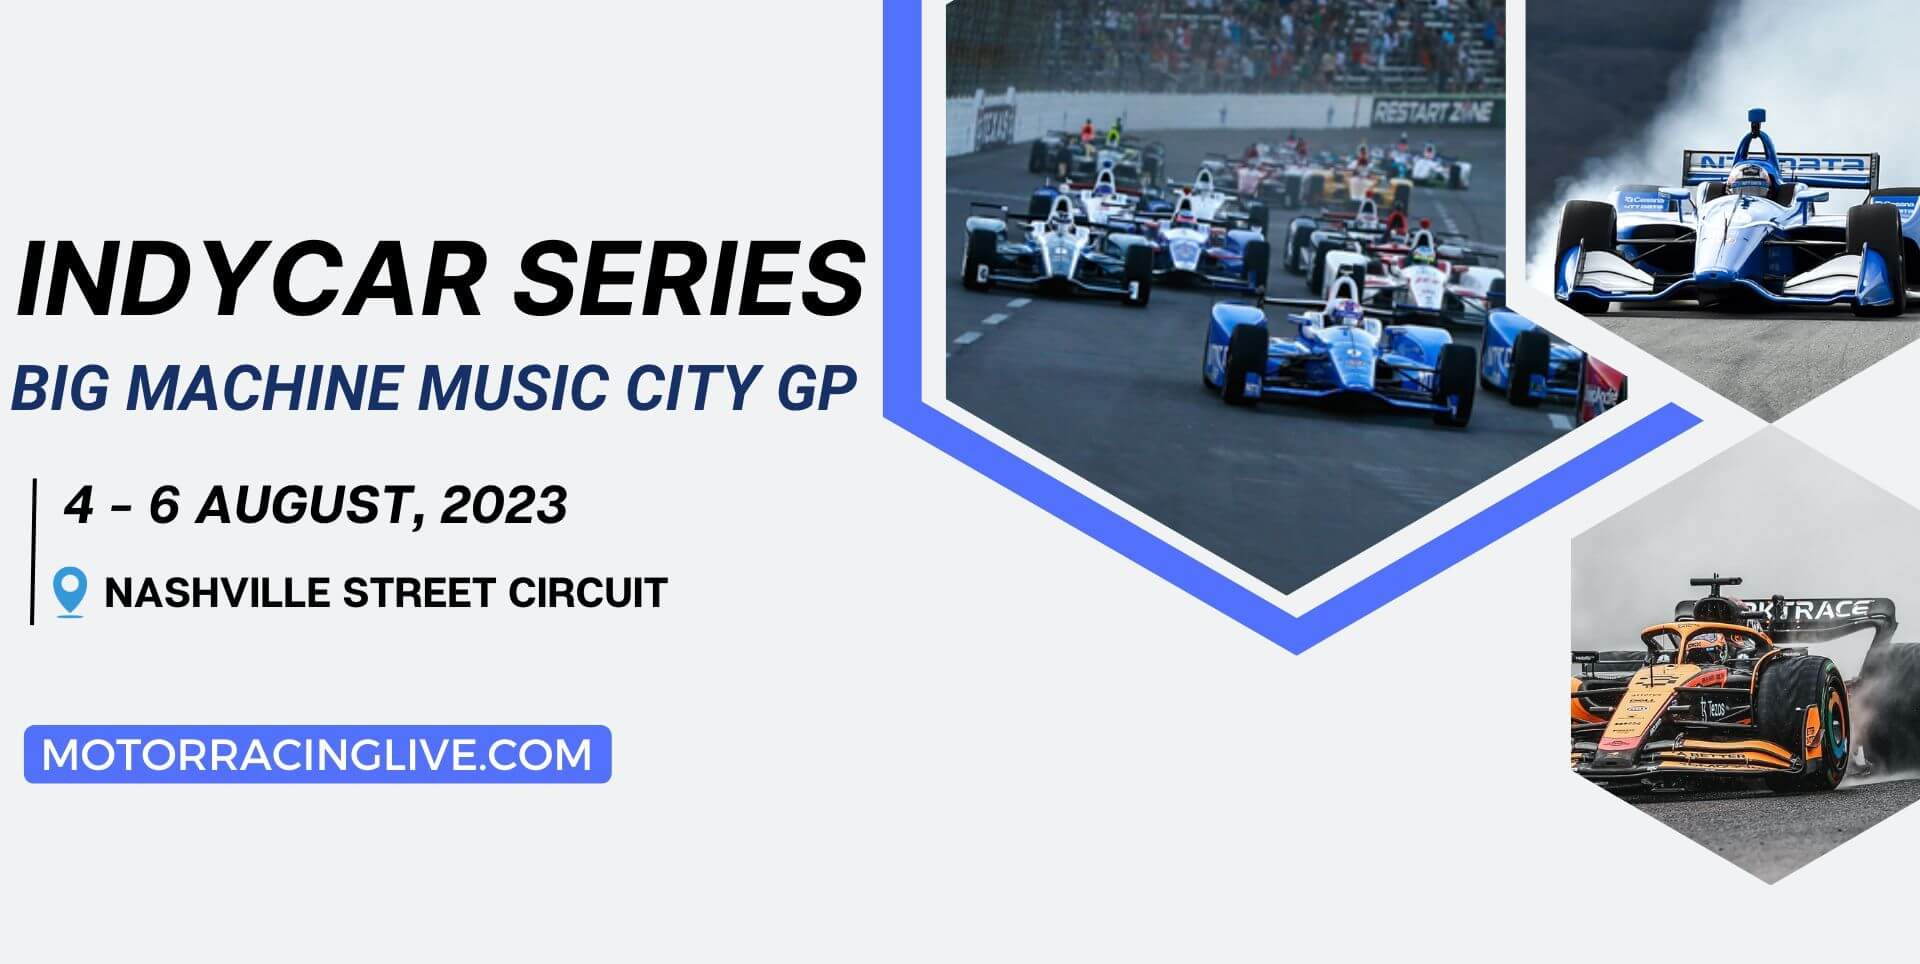 Big Machine Music City GP Live Stream 2023 | Indycar